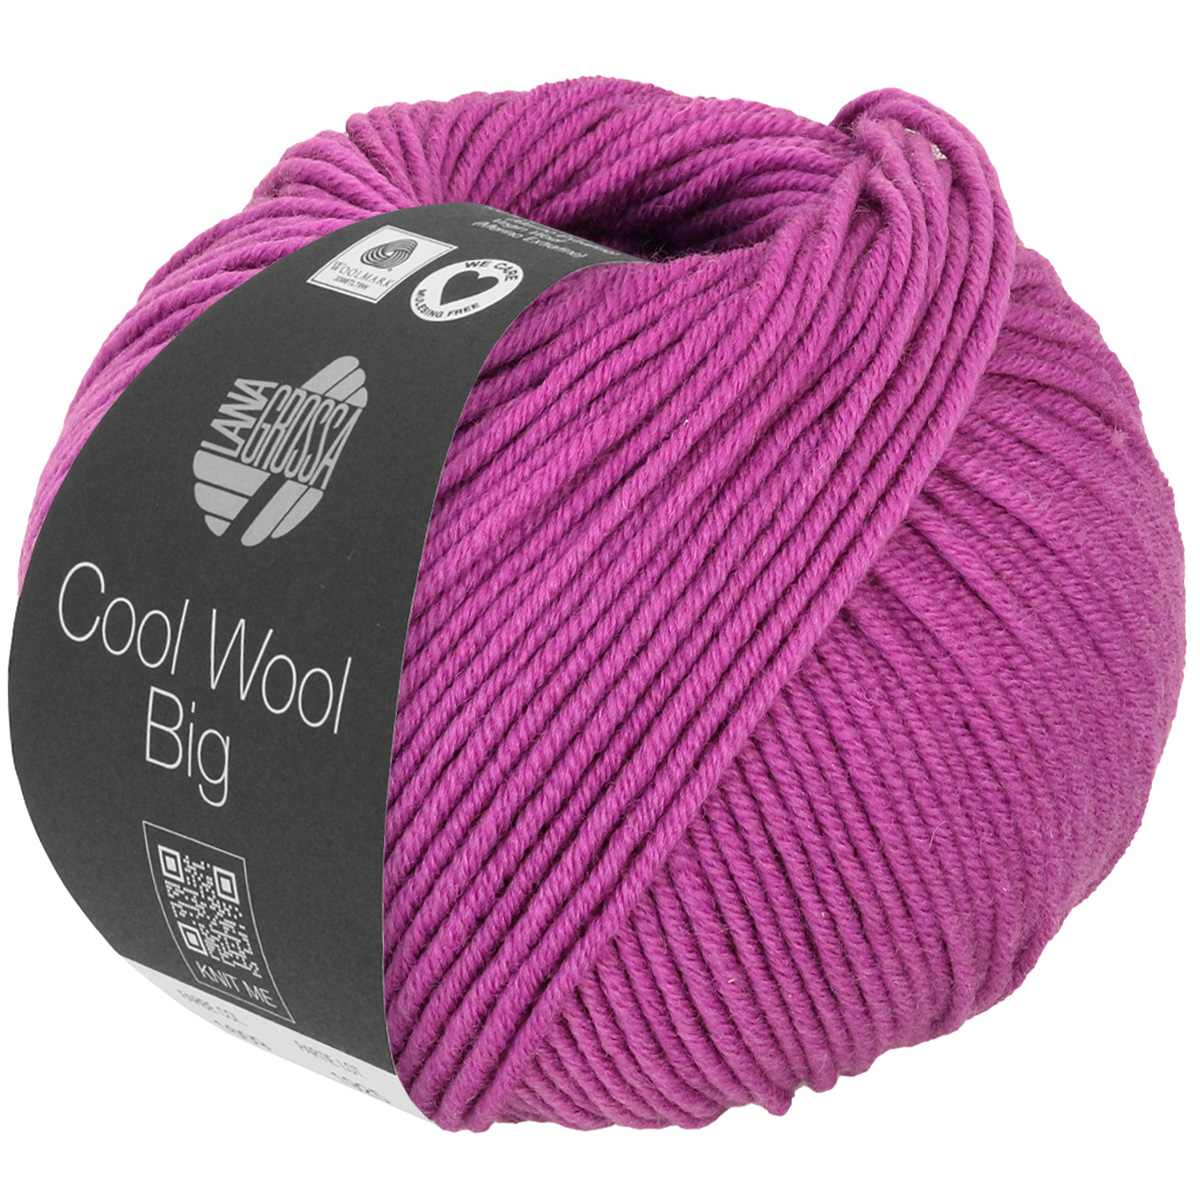 Lana Grossa Cool Wool Big kleur 1017